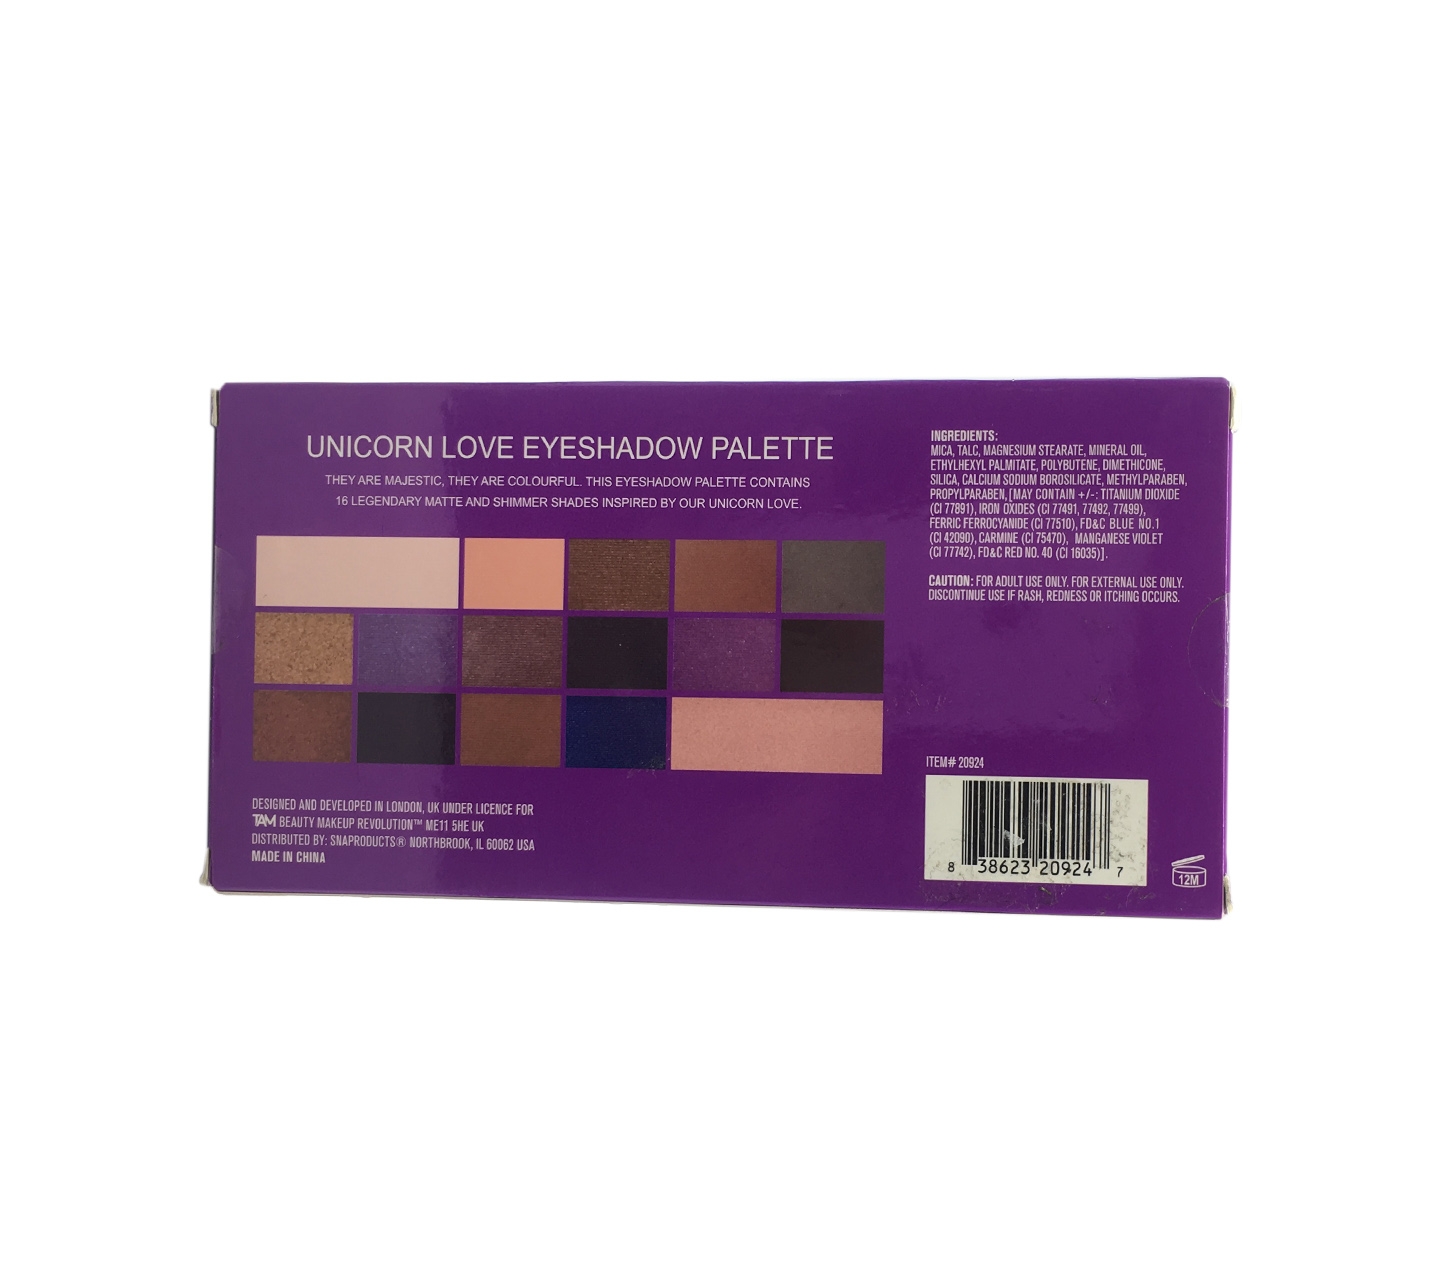 Revolution Unicorn Love Eyeshadow Palette 16 Legendary Matte And Shimmer Shades Sets And Palette